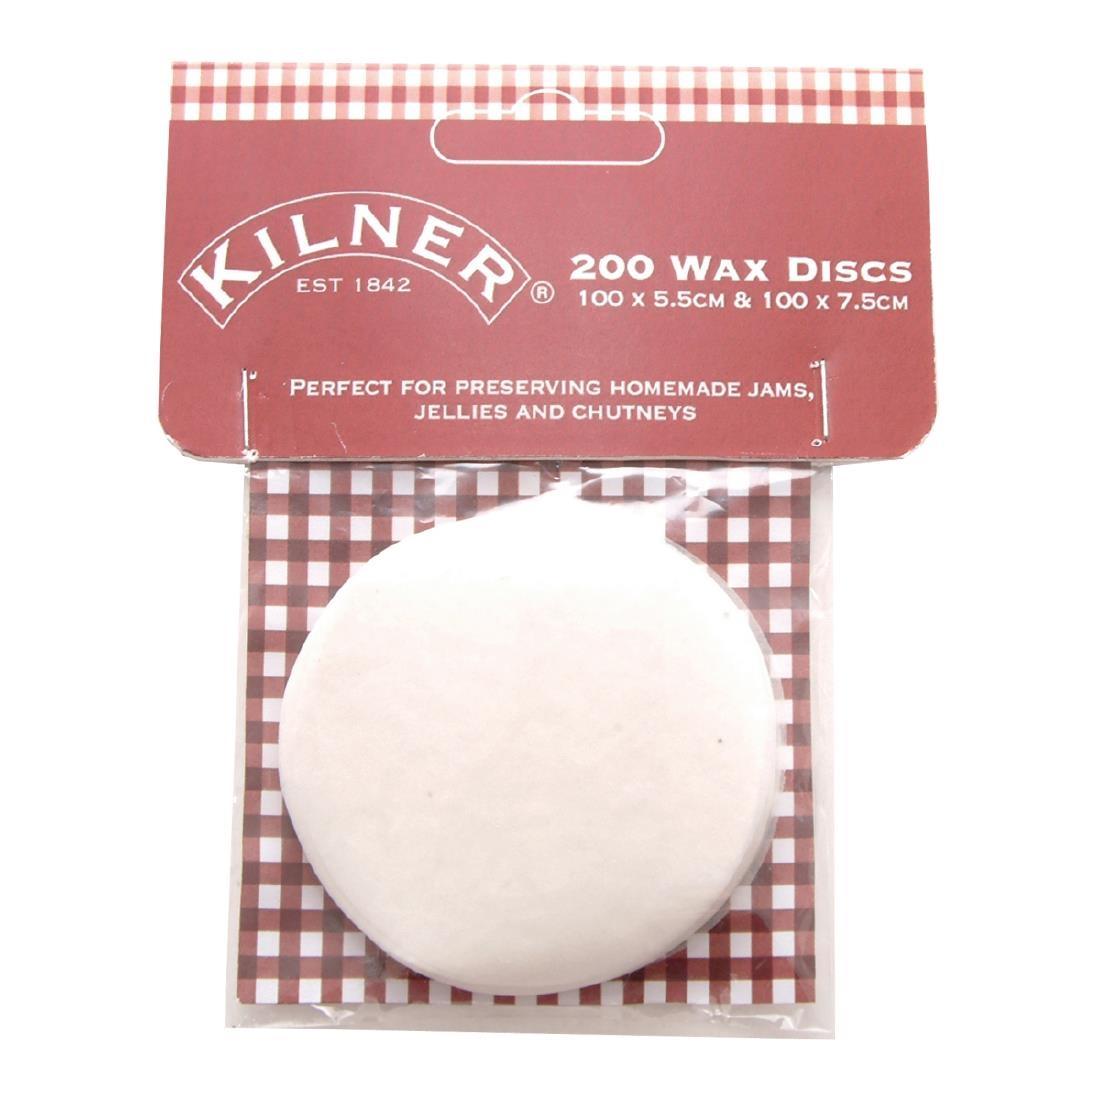 Kilner Wax Discs (Pack of 200) - GL876  - 1